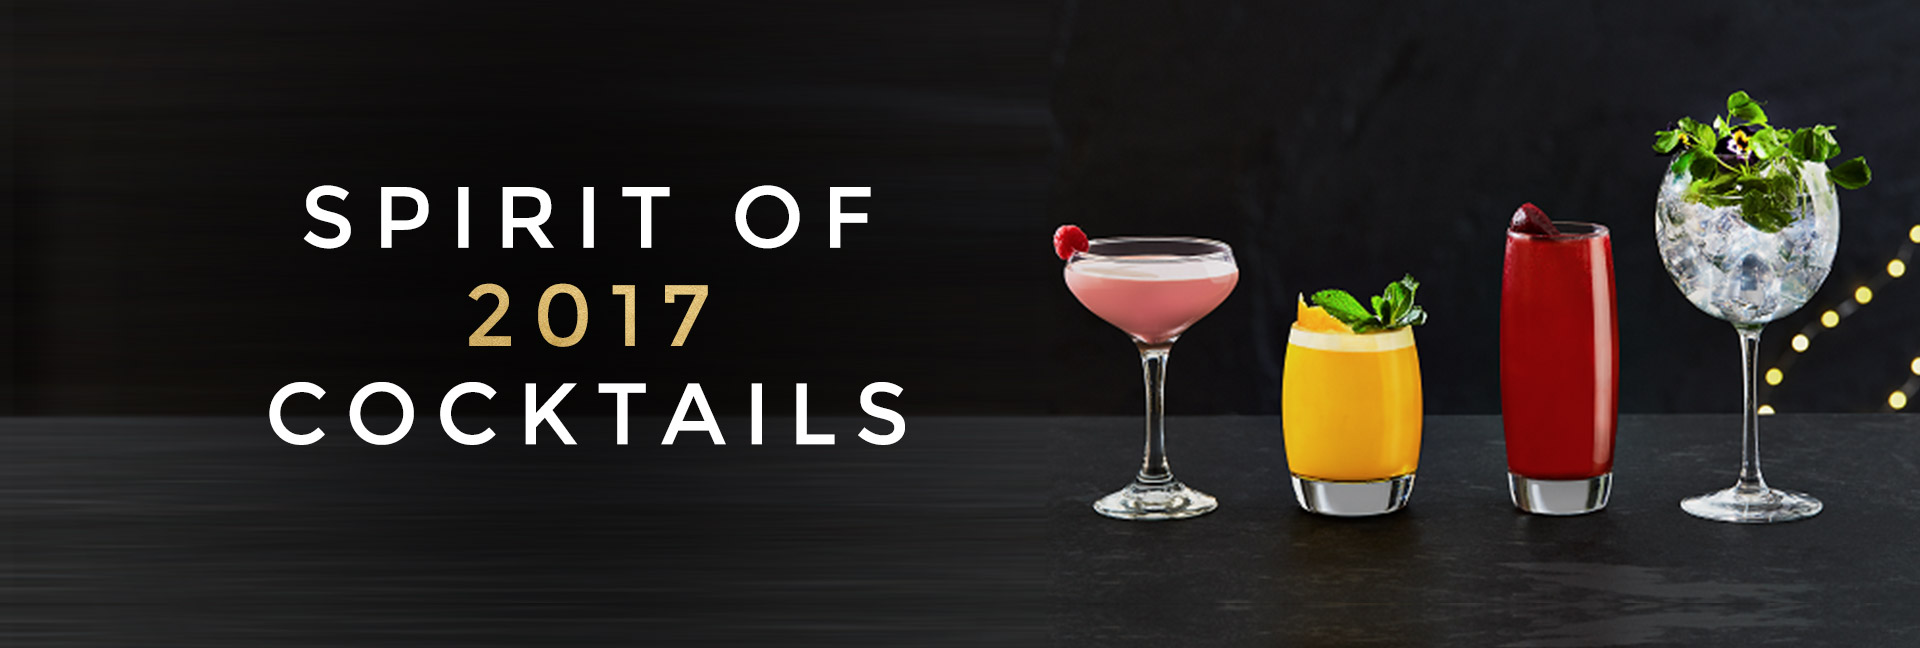 Spirit of 2017 cocktails at All Bar One Milton Keynes